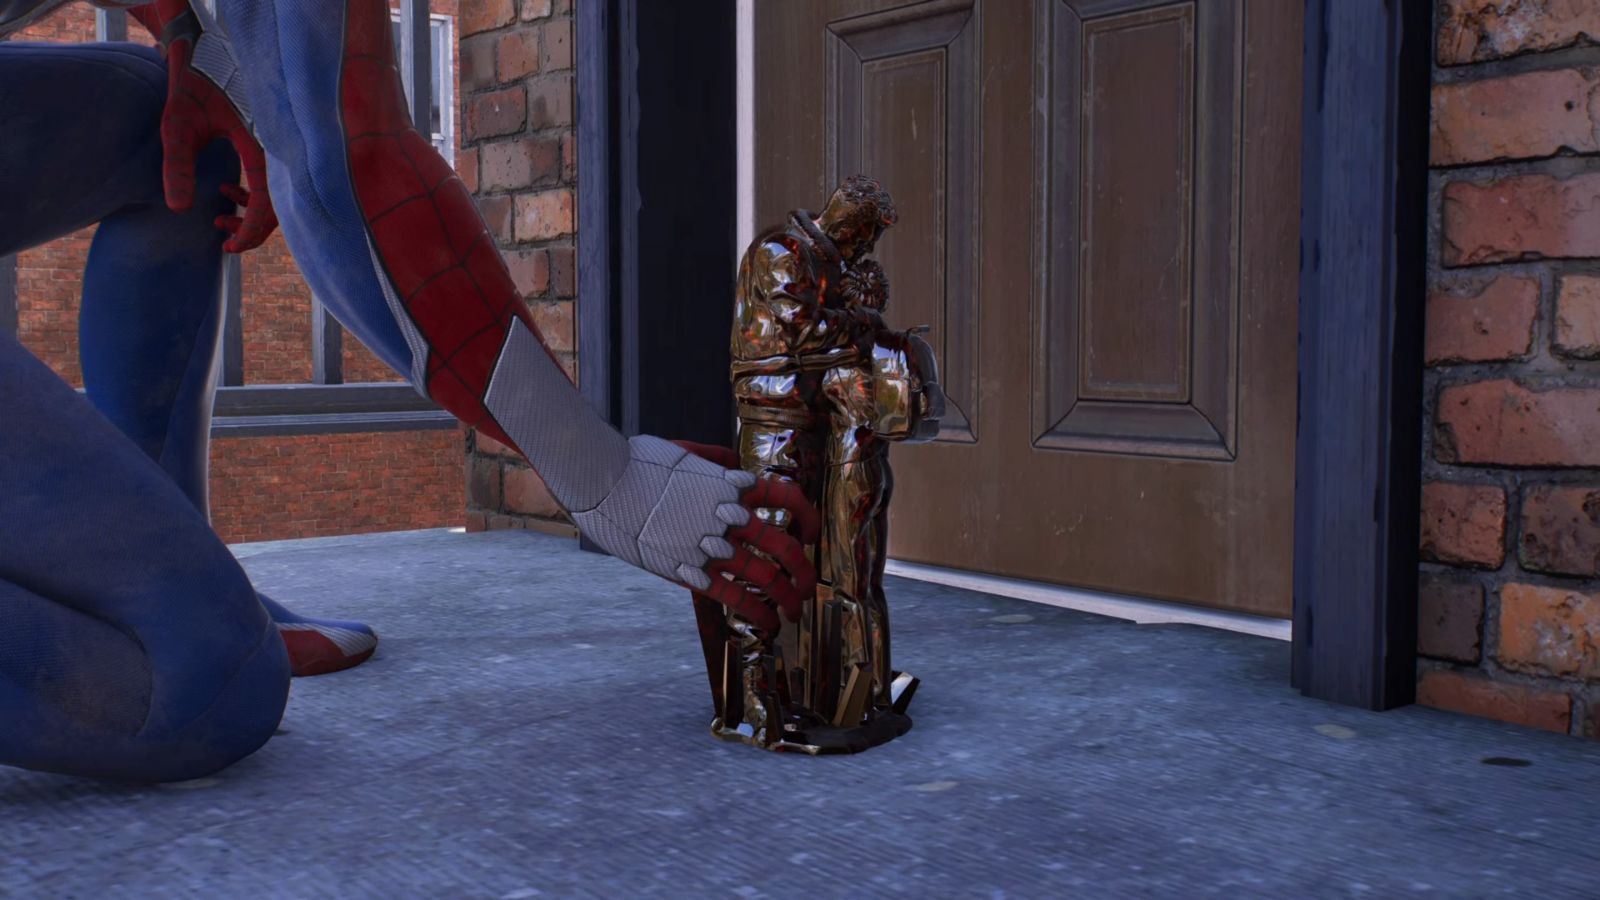 Spider-Man delivering a statue